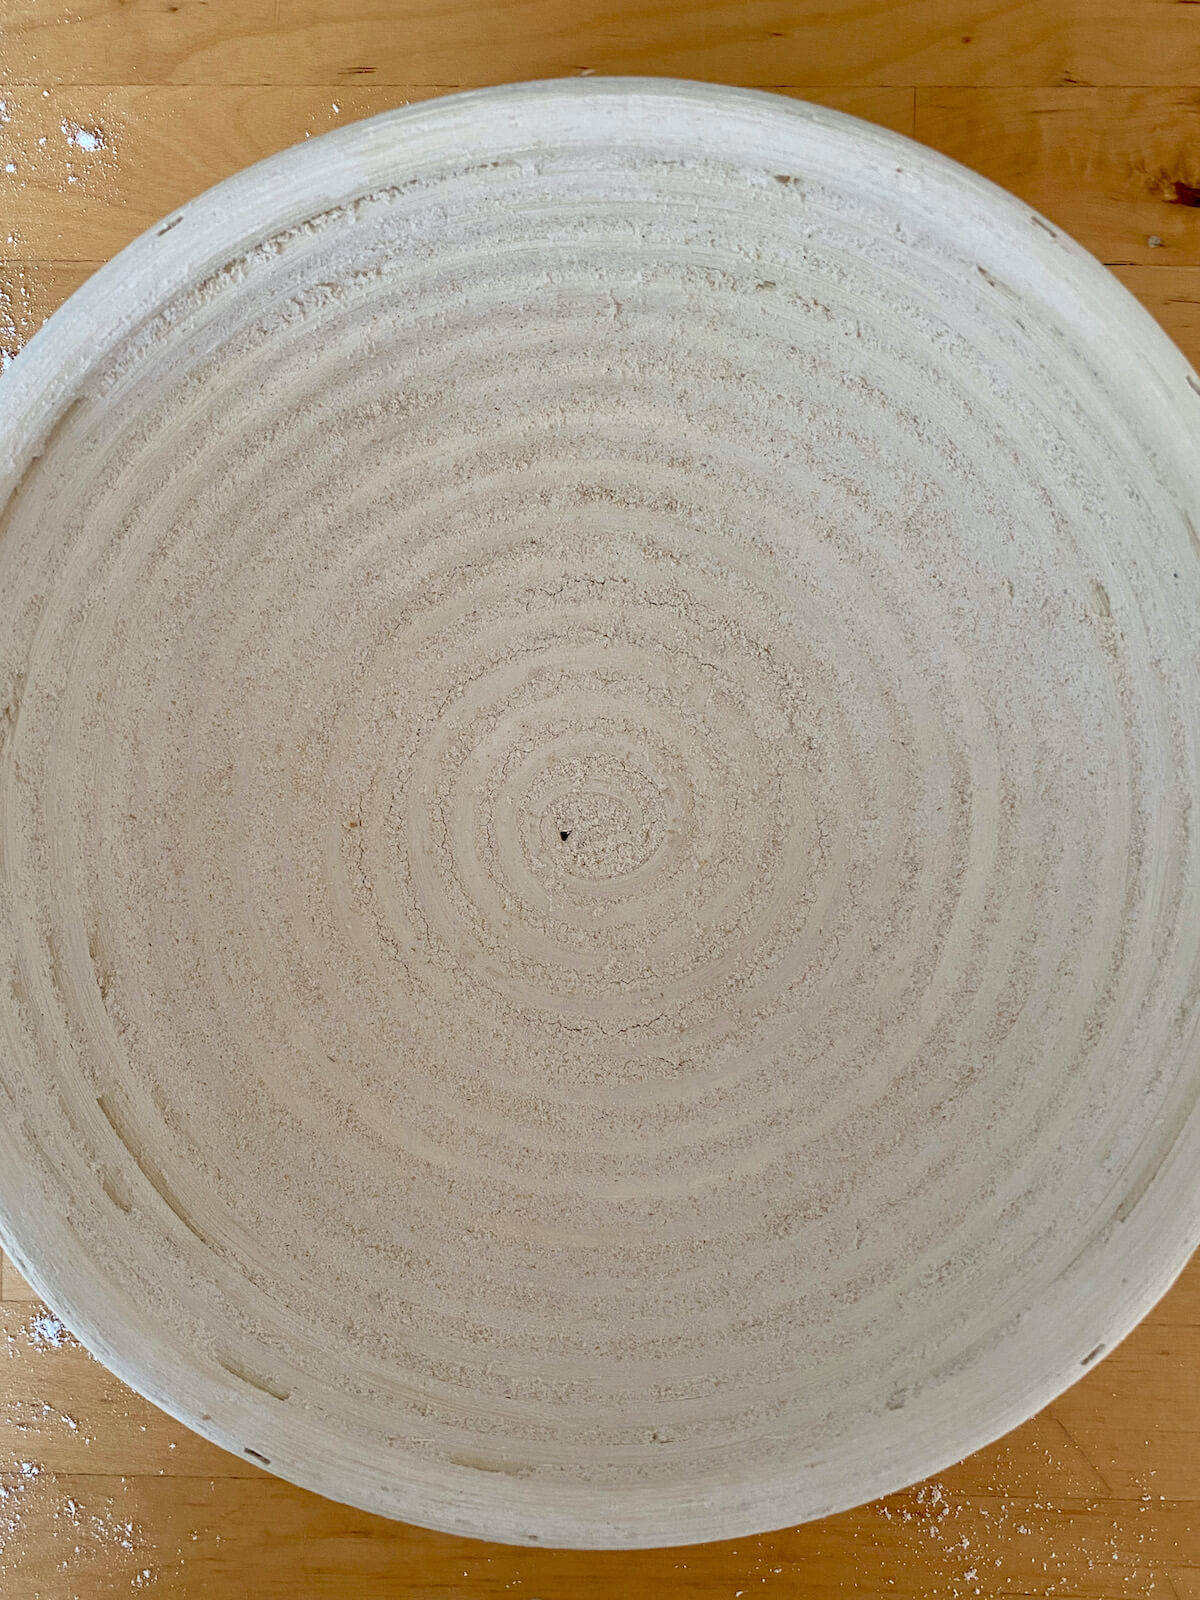 An oat flour-dusted banneton.